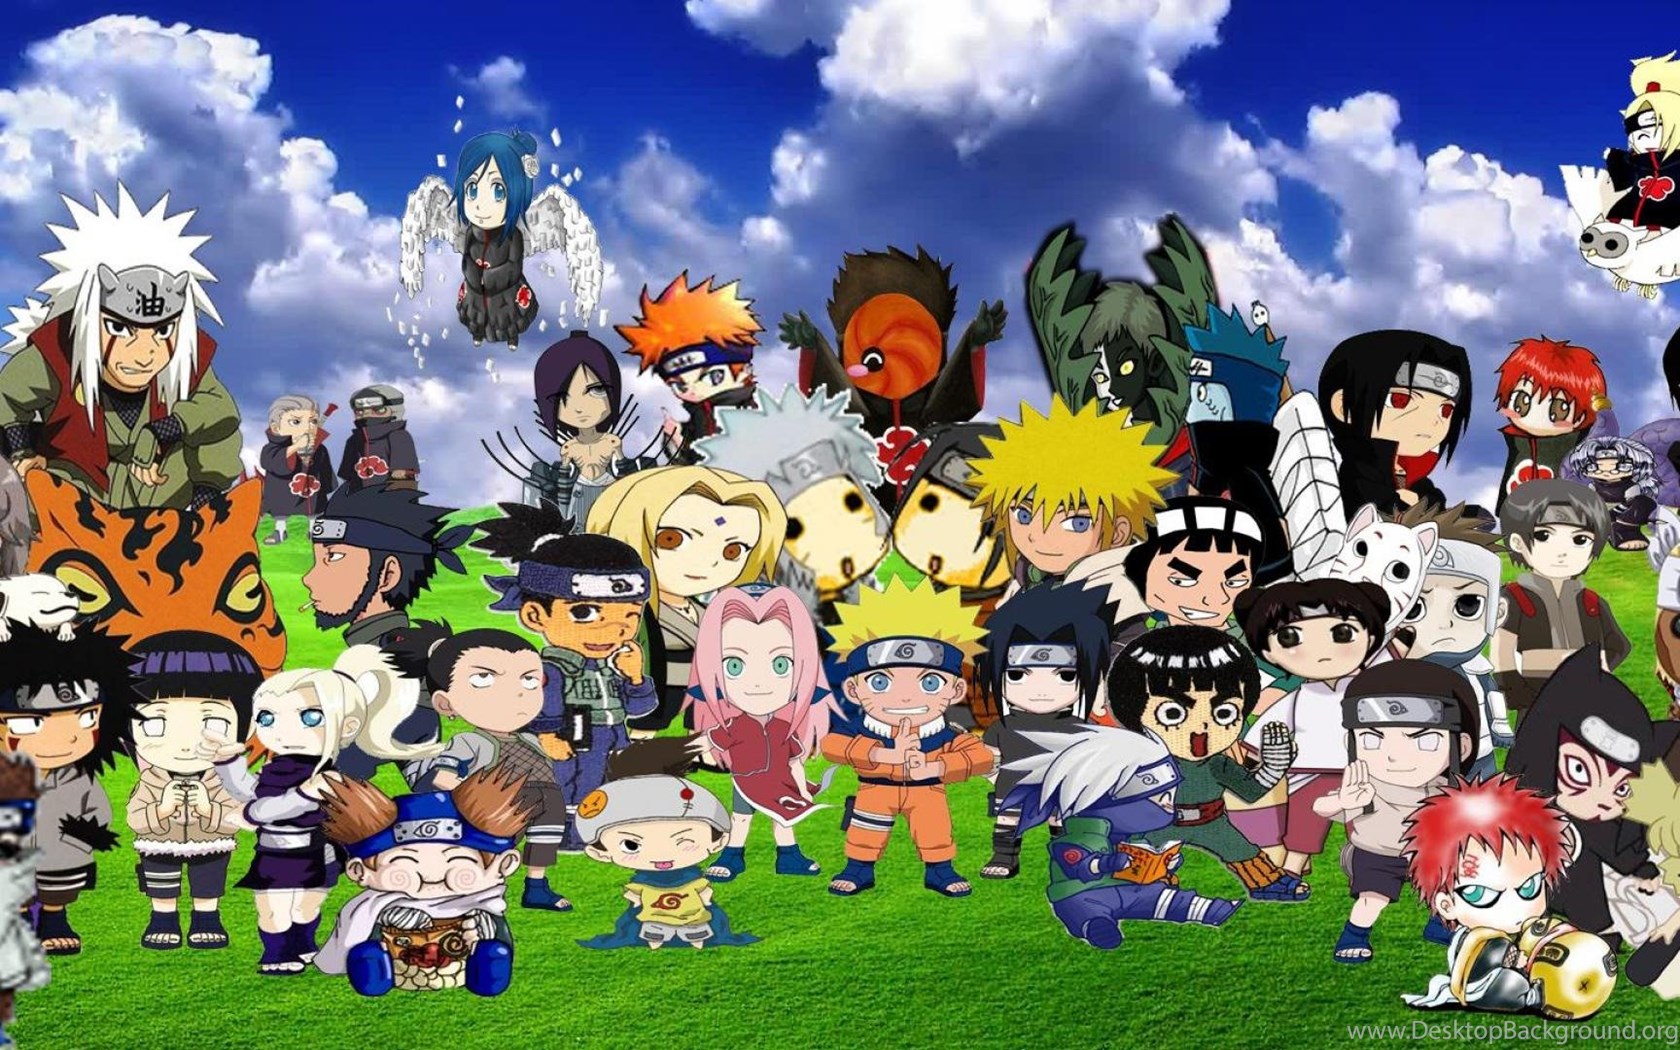 Wallpaper: Chibi, Naruto, Anime, Manga, Characters, Group, Cute. Desktop Background